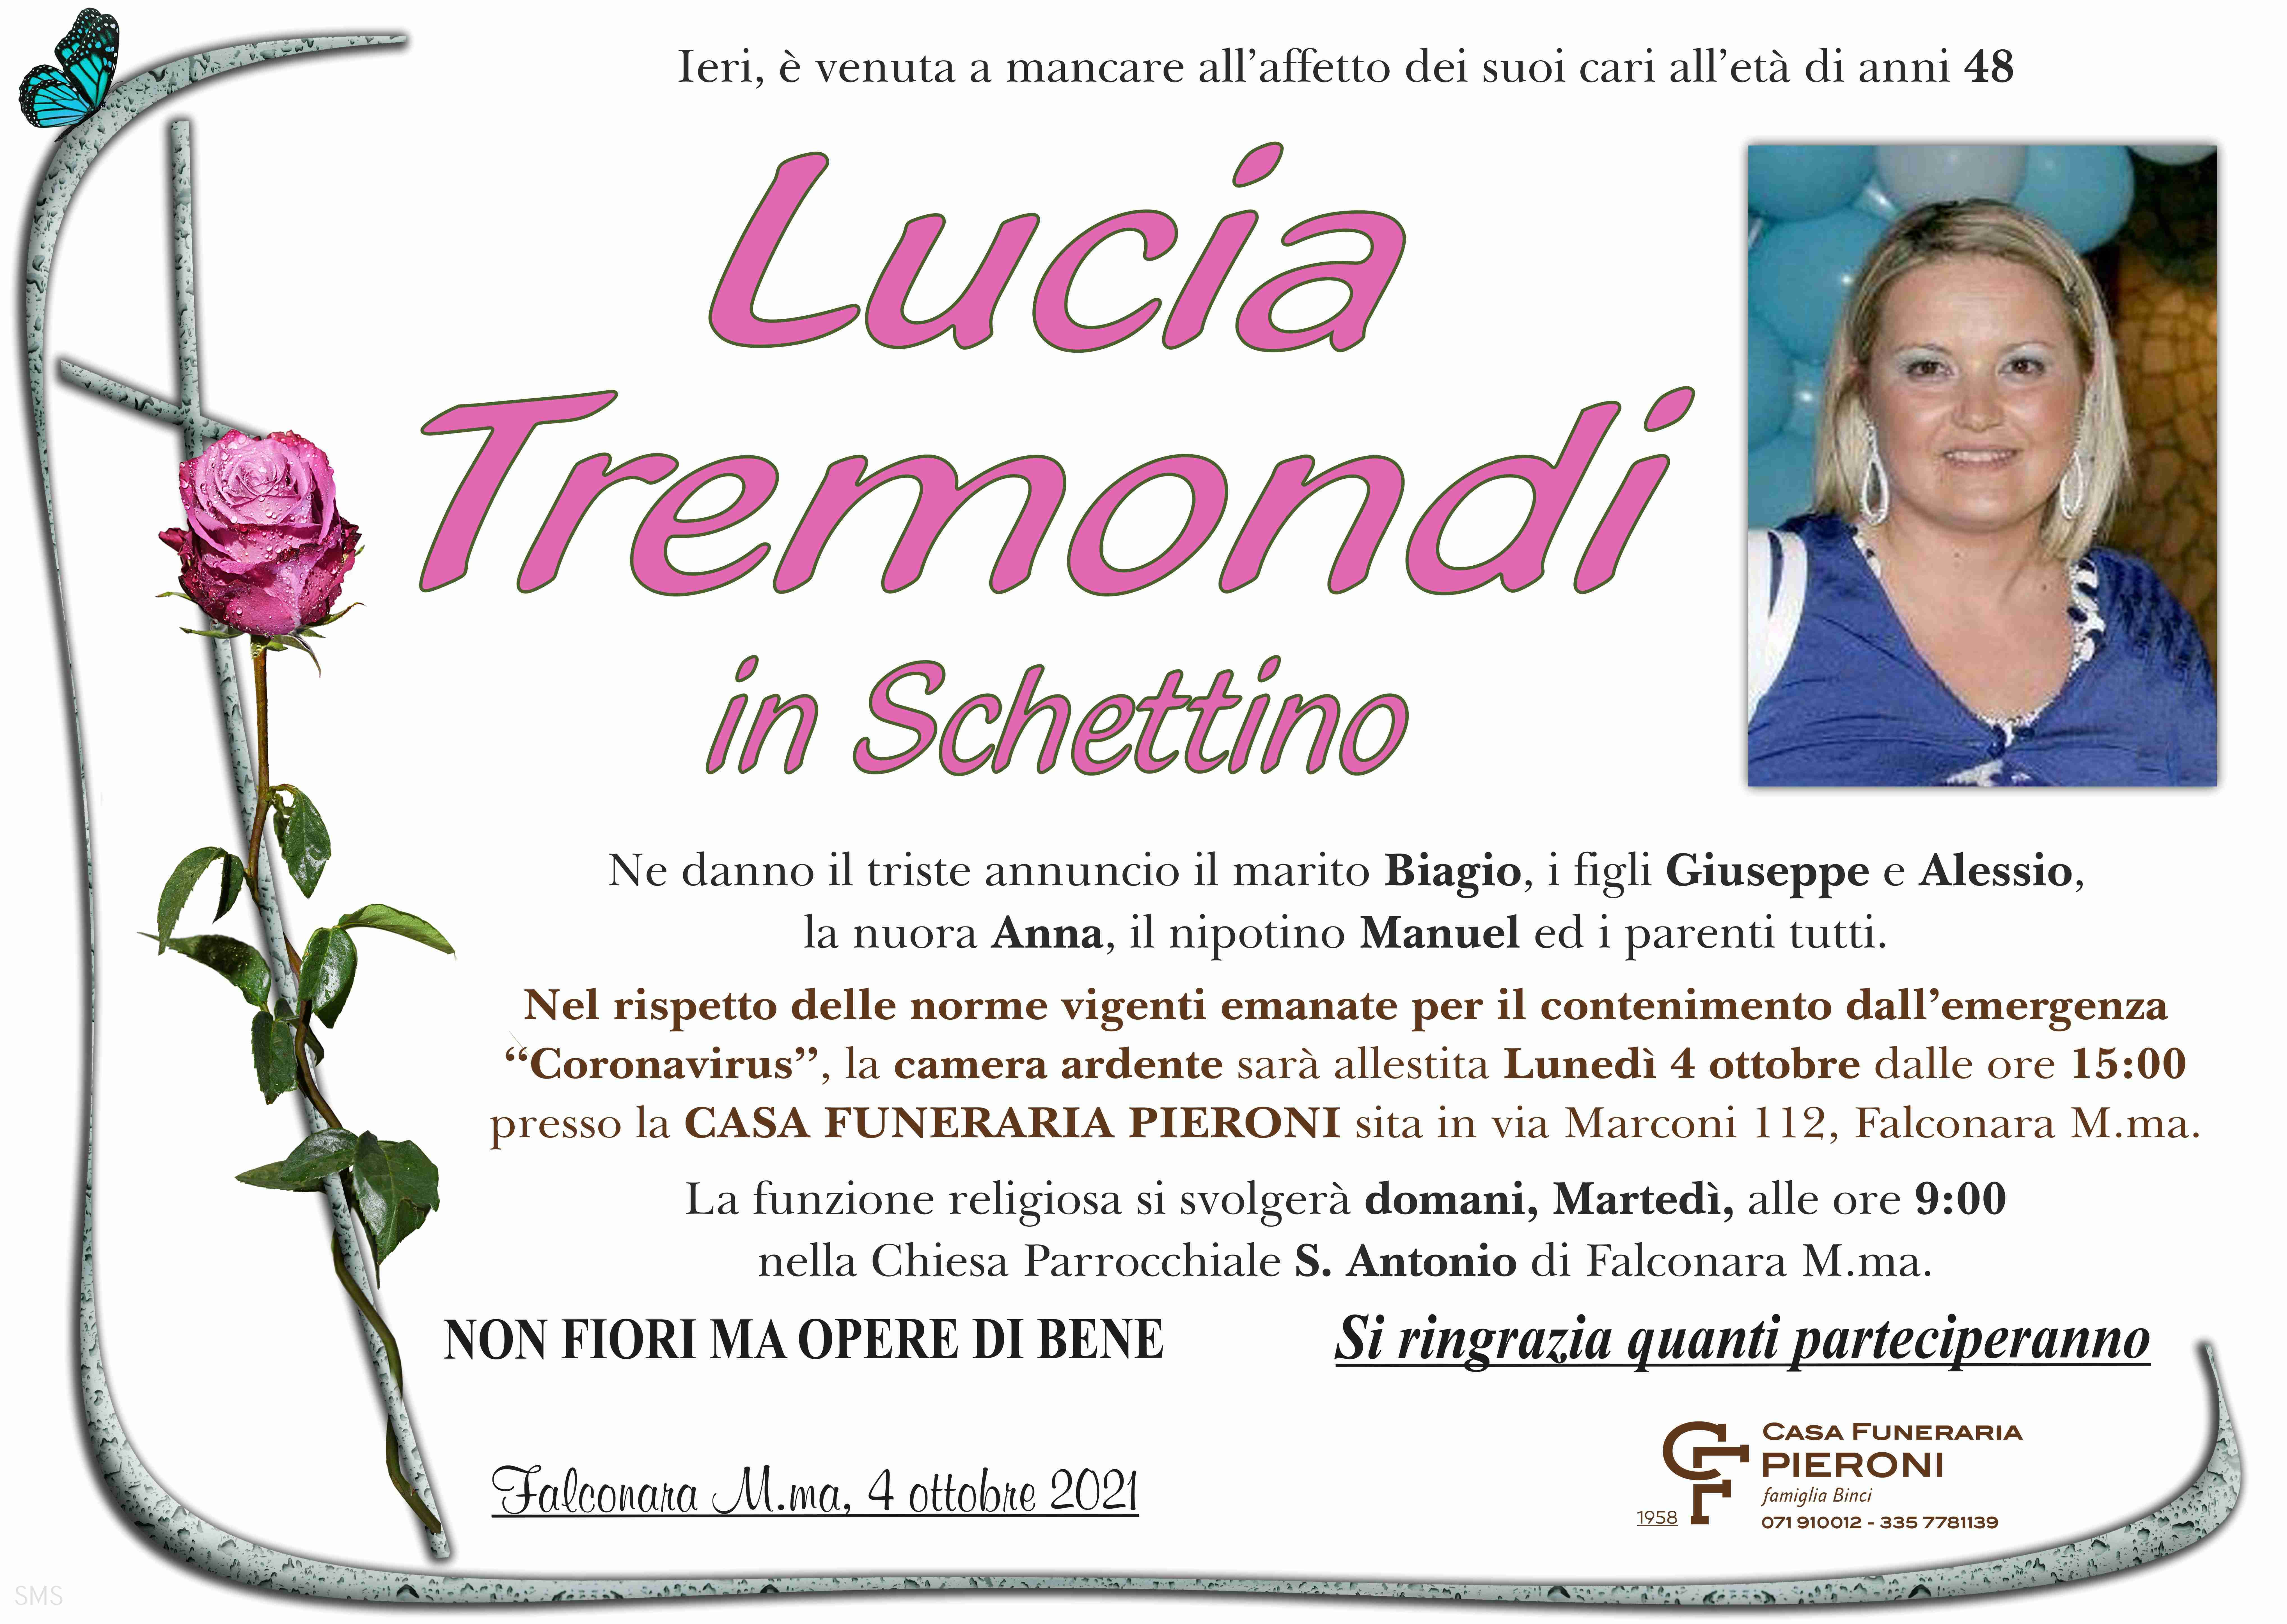 Lucia Tremondi